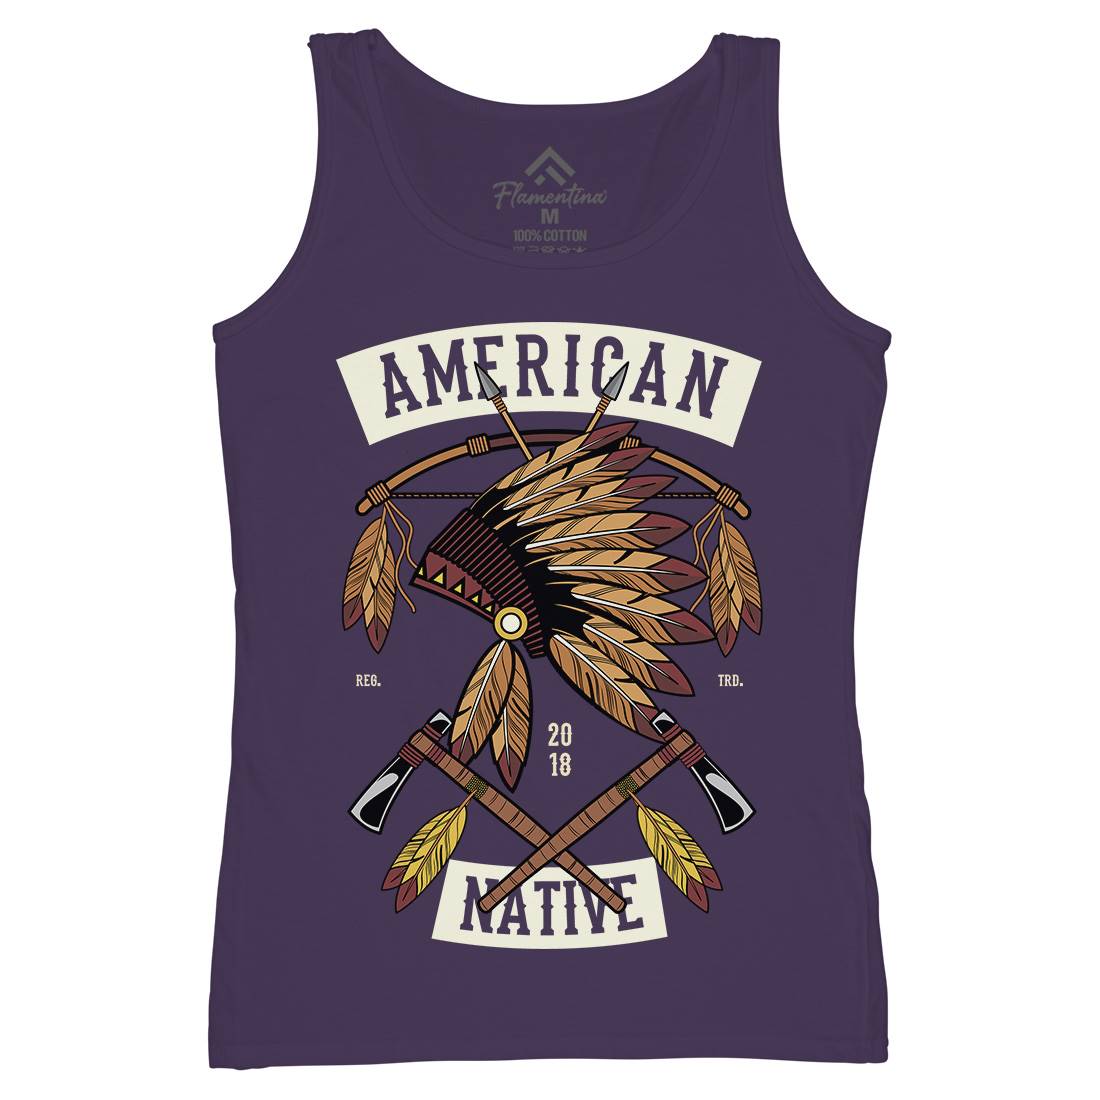 American Native Womens Organic Tank Top Vest American C303